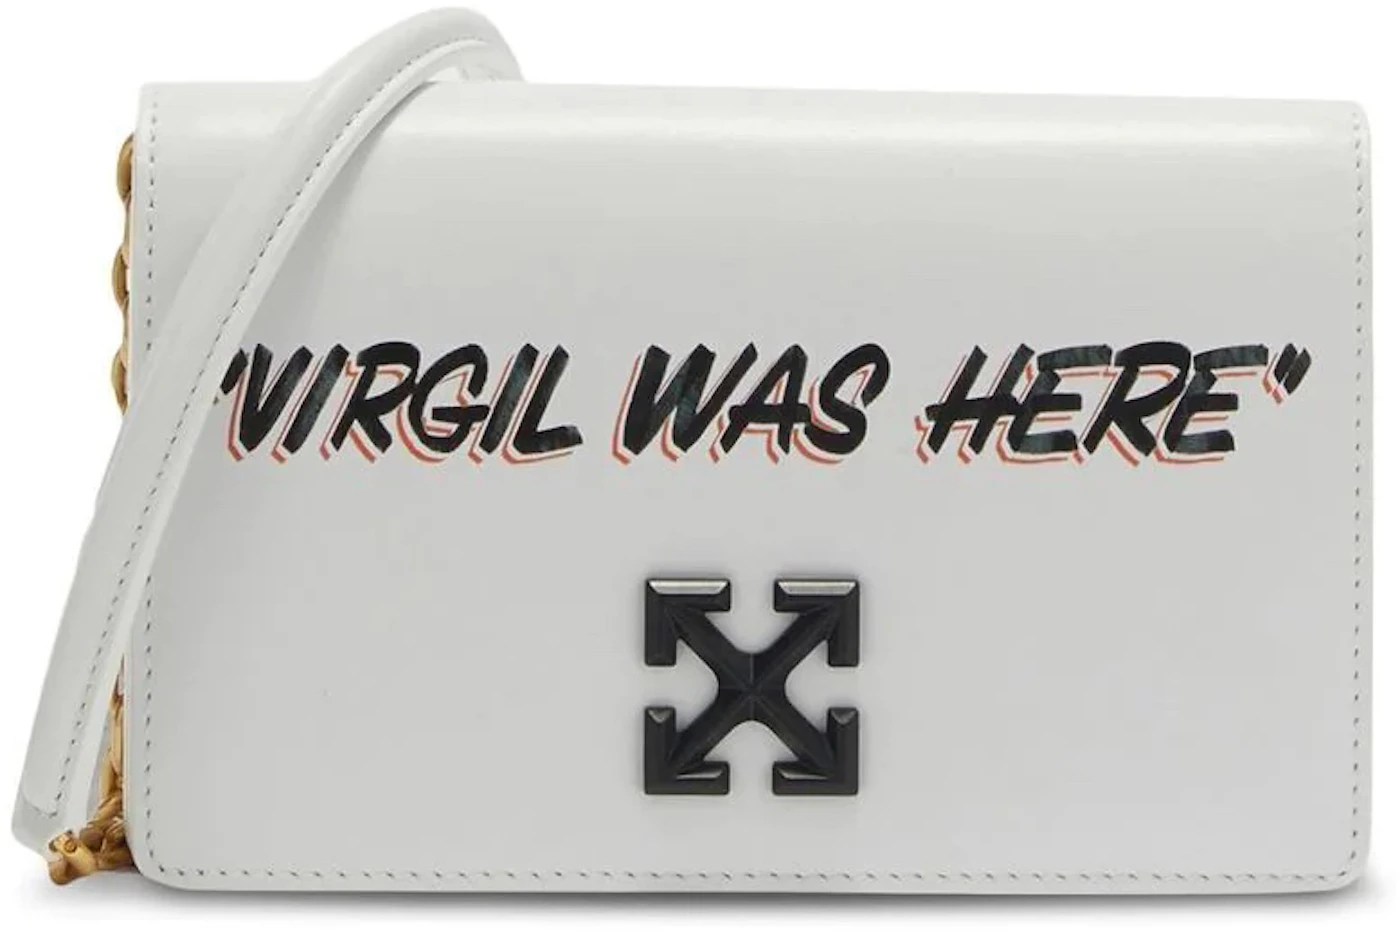 OFF-WHITE  Jitney 1.4 Leather Shoulder Bag - Virgil Was Here